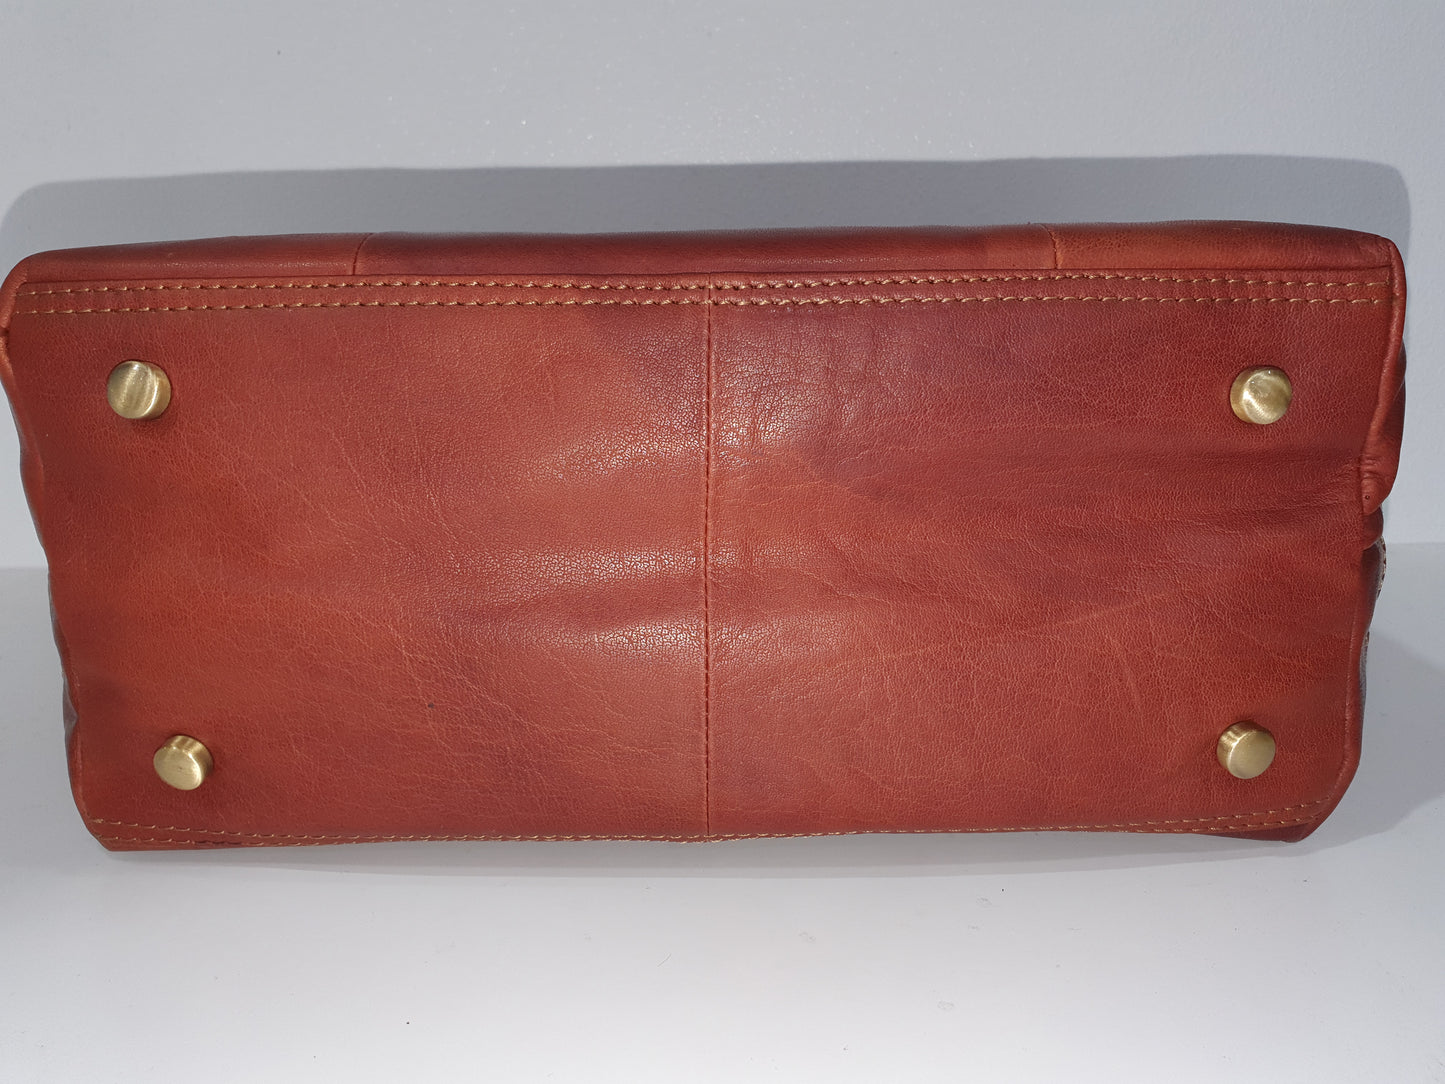 Rugged Hide - Roxy Tote leather bag Ladies shopper bag